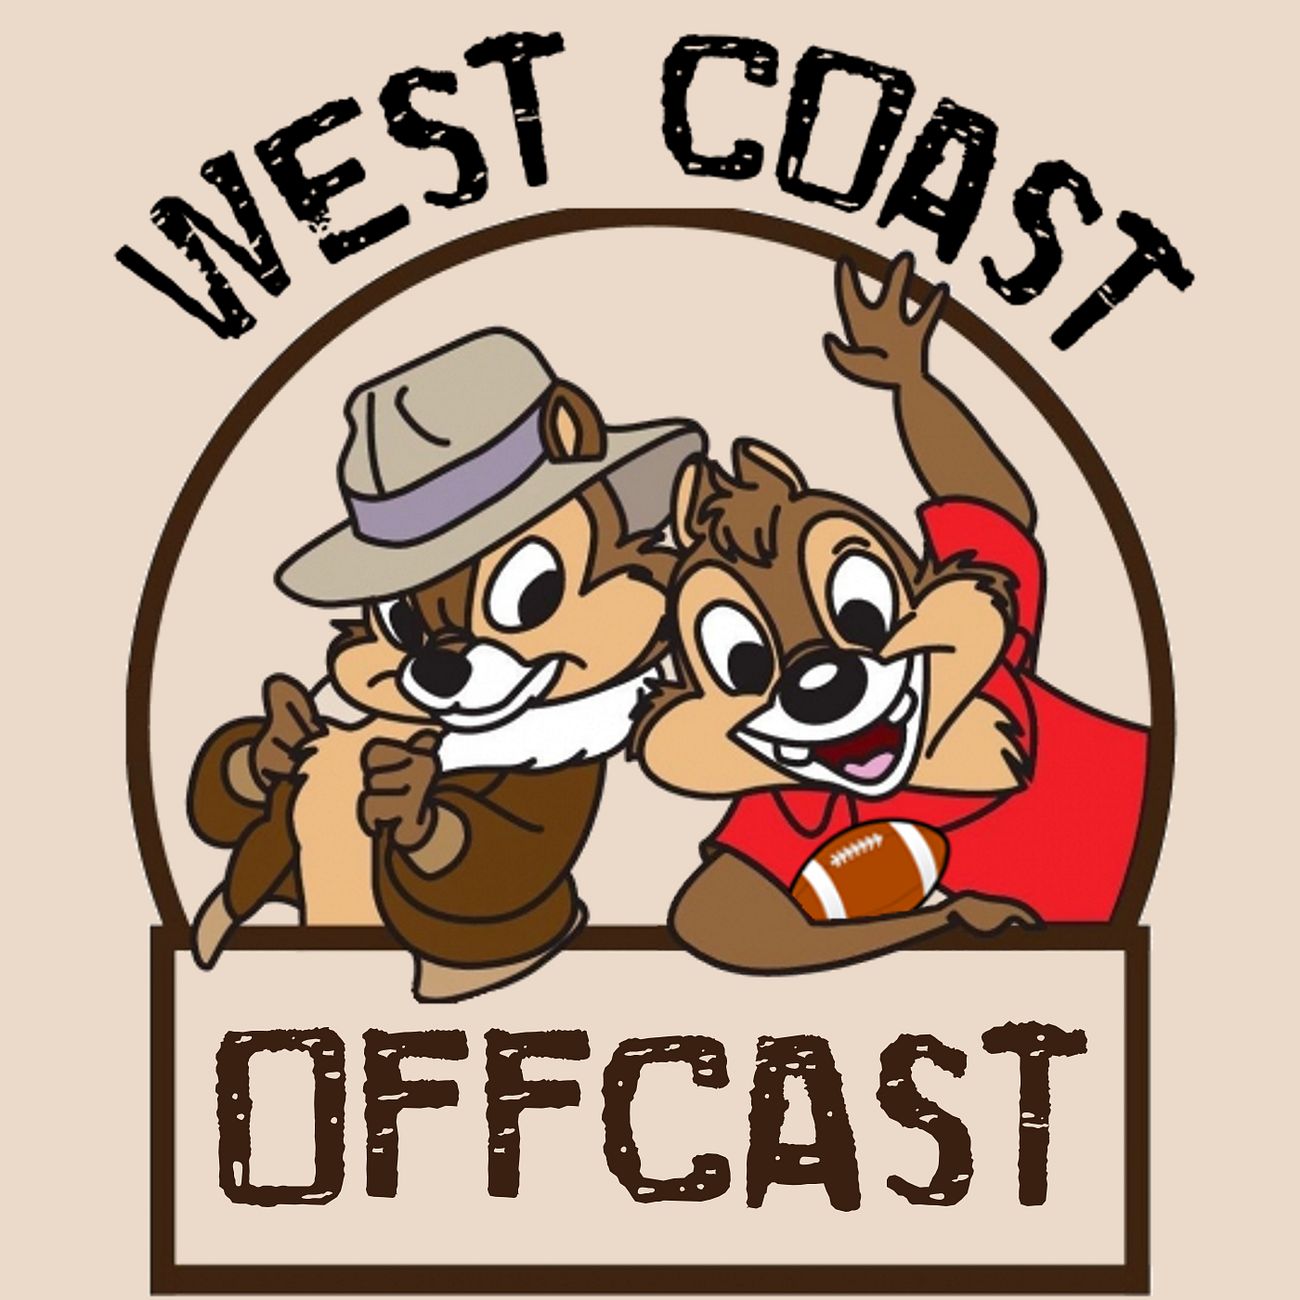 West Coast Offcast